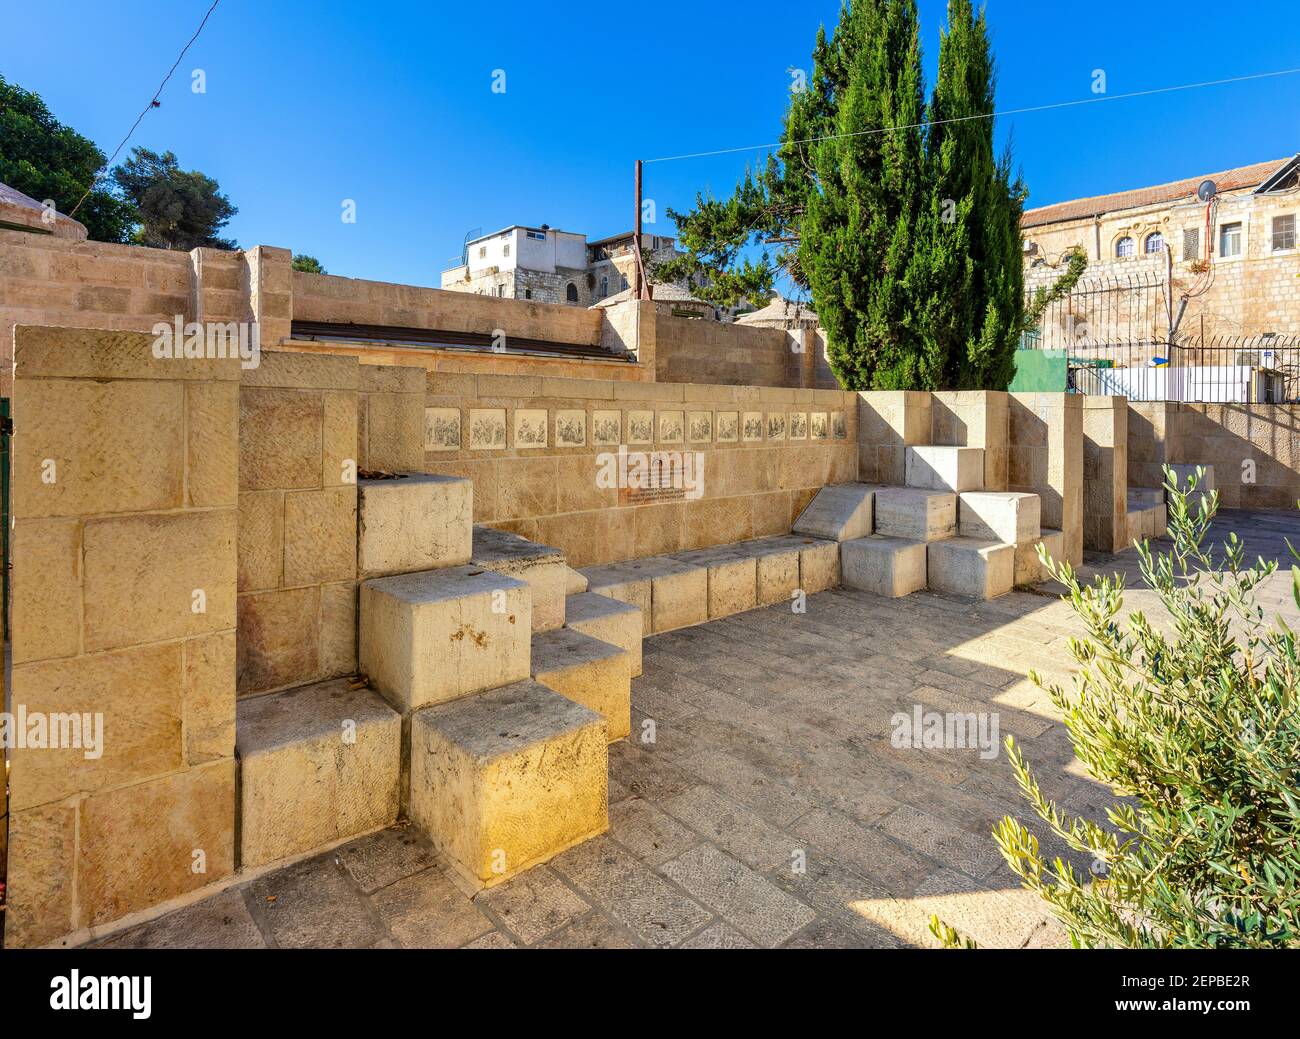 Jerusalem, Israel - October 12, 2017: Via Dolorosa monument at Lions’ Street opposite Lions’ Gate in eastern Islamic quarter of Jerusalem Old City Stock Photo